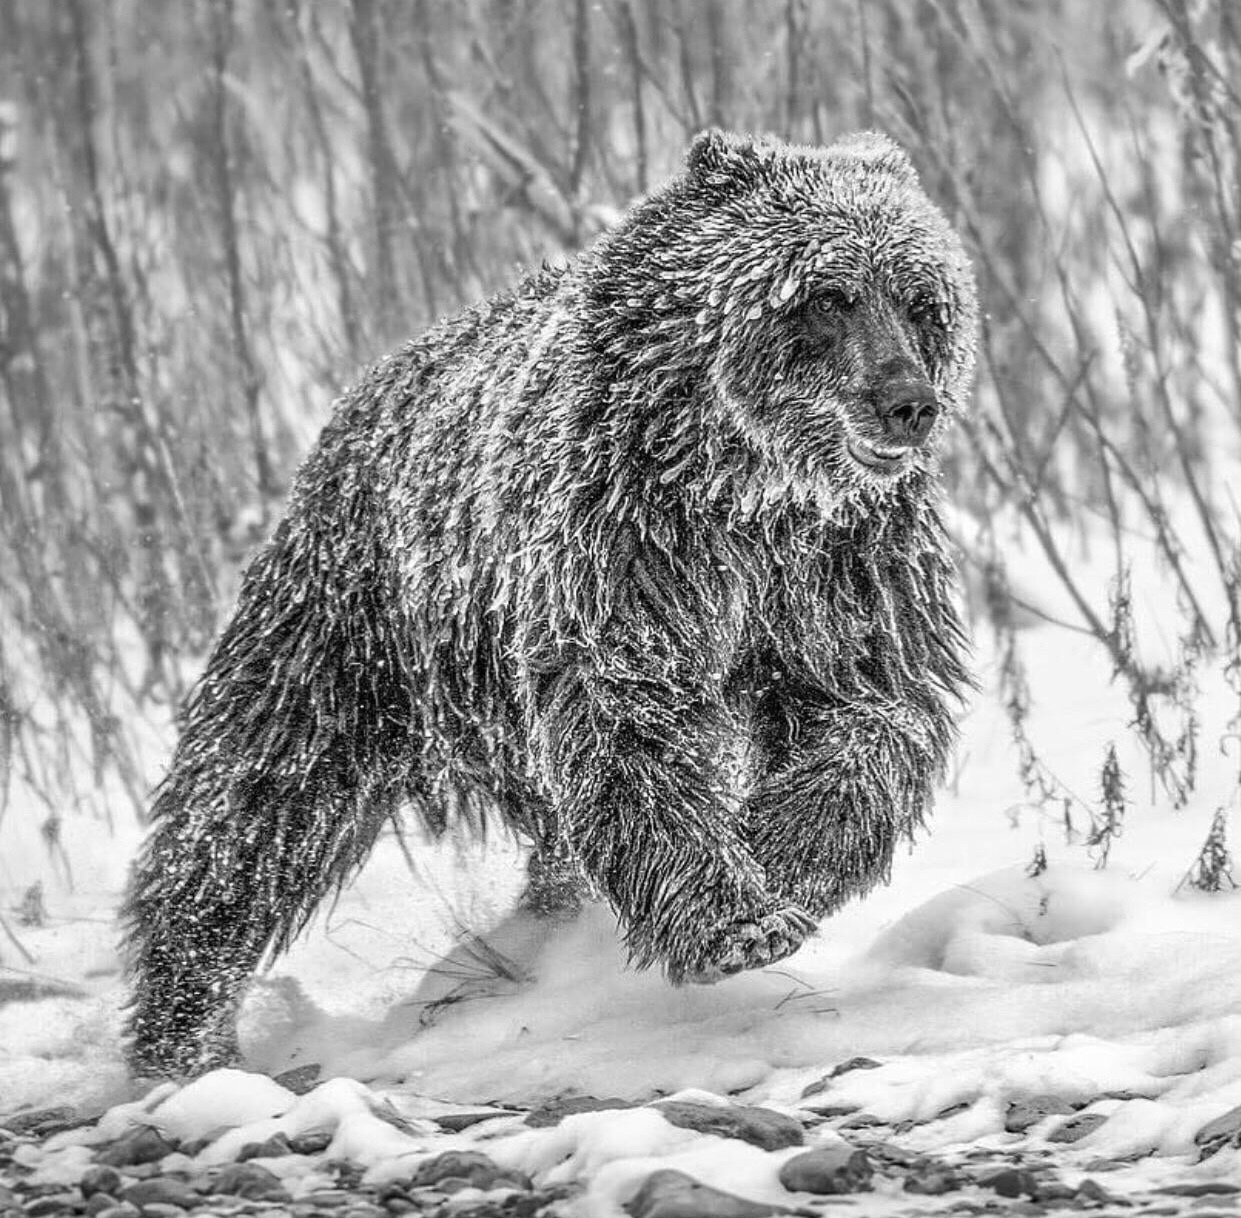 paul nicklen photographing bear